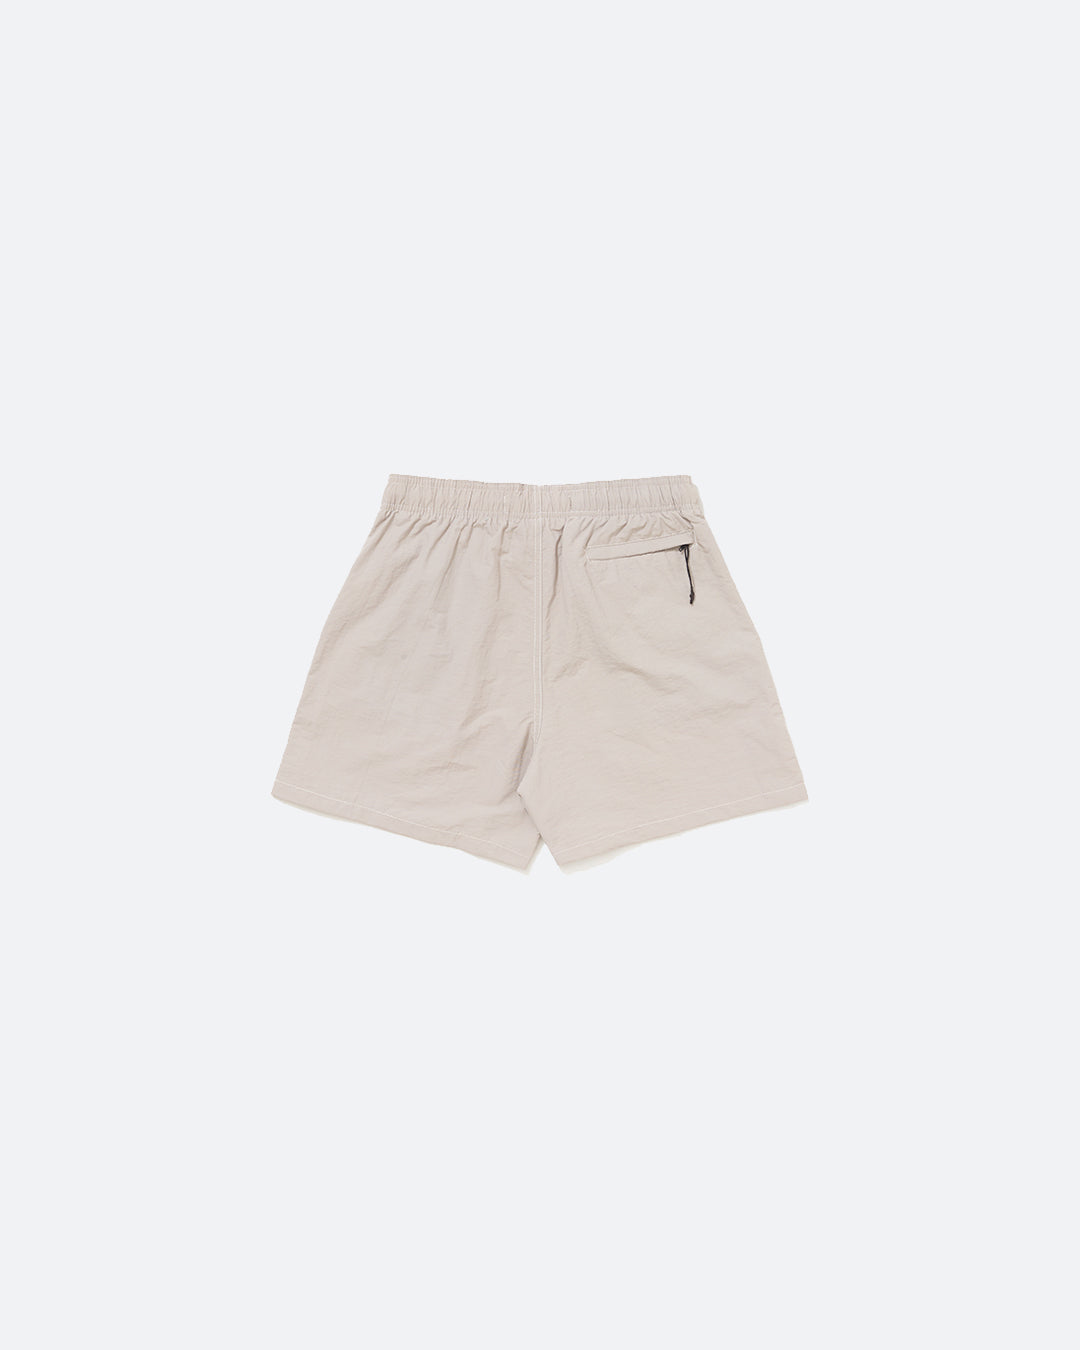 The Classic Nylon Shorts